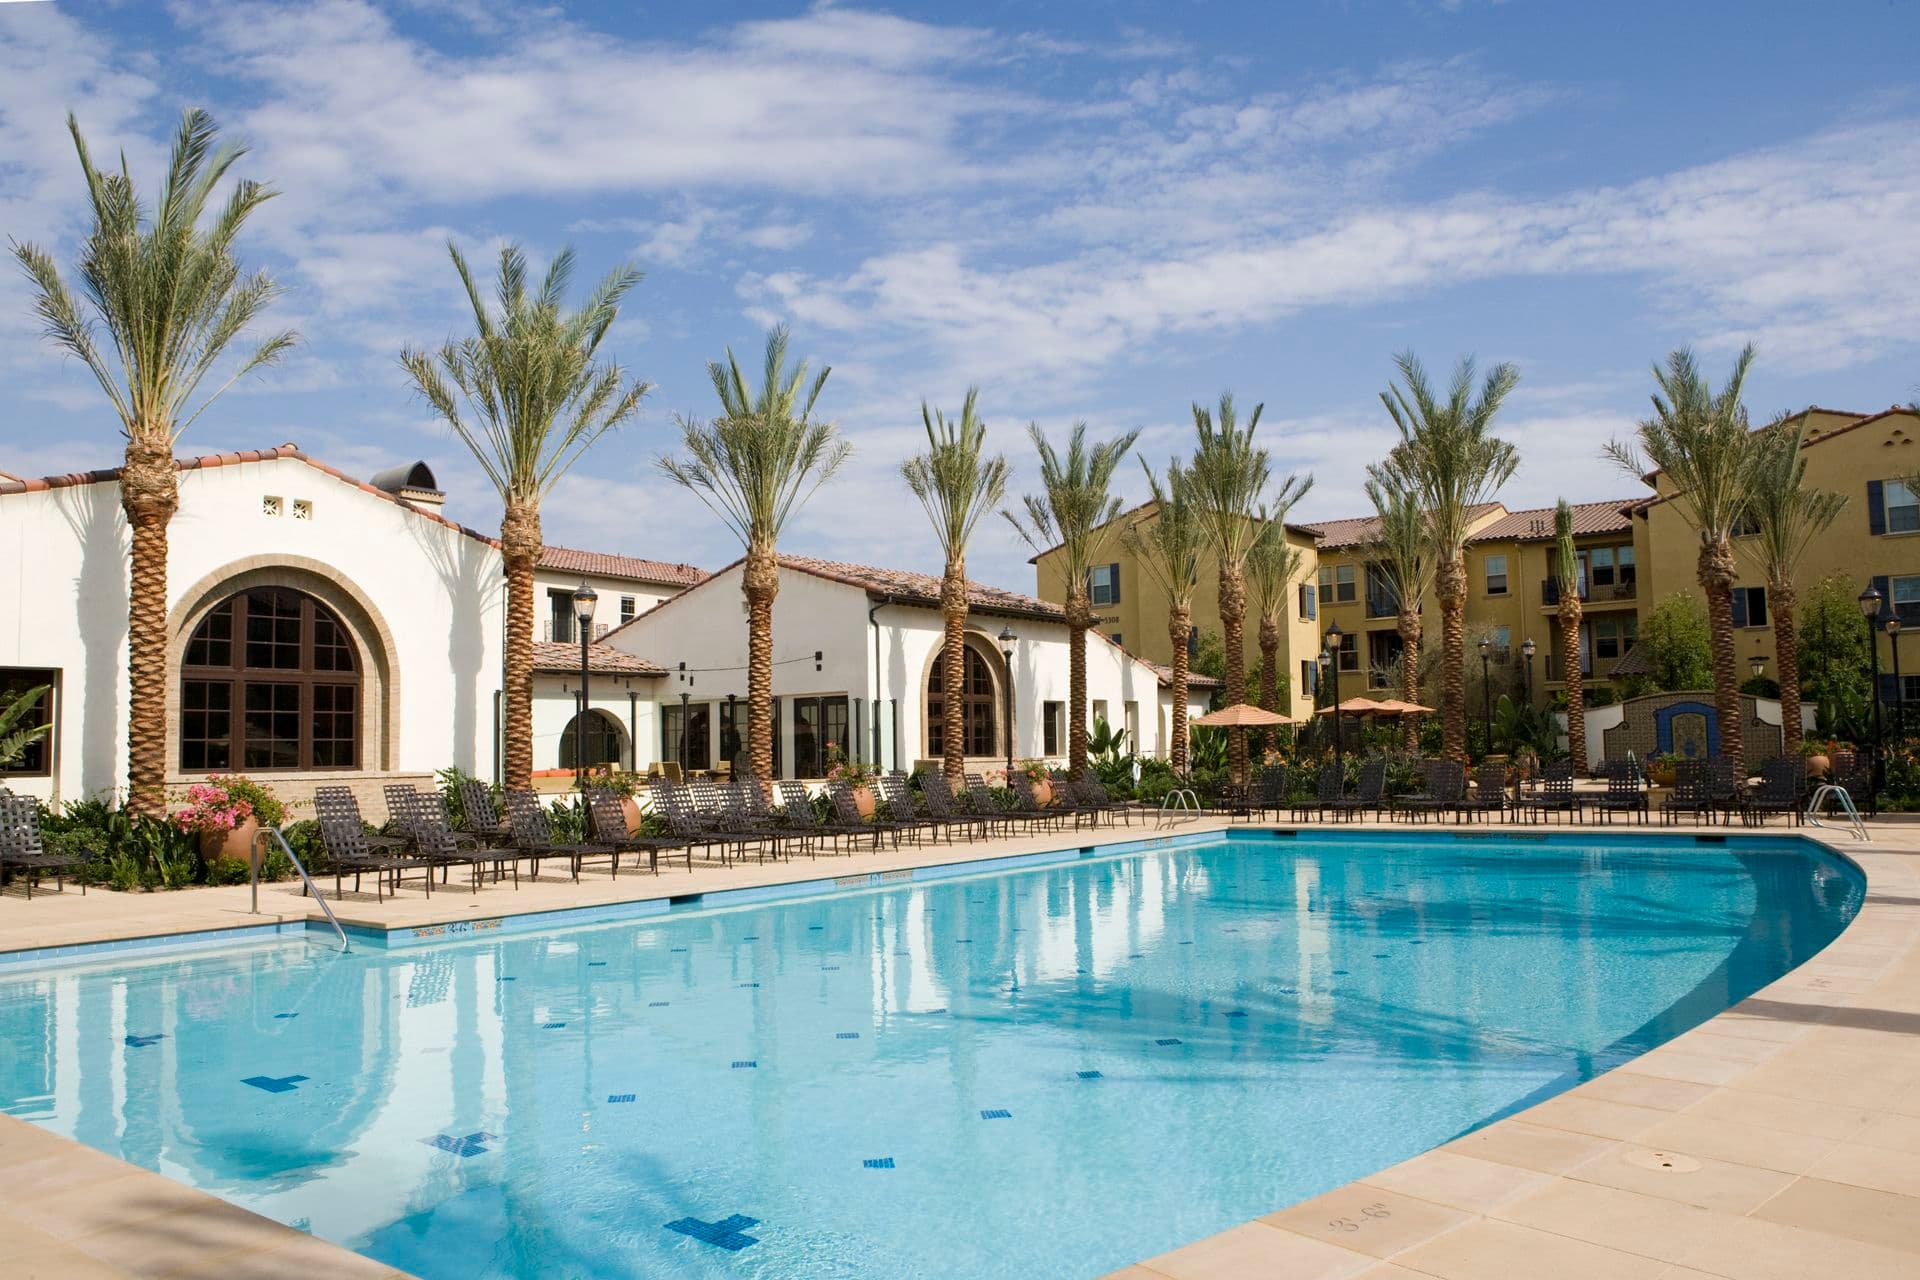 Pool view at Esperanza Apartment Homes in Irvine, CA.